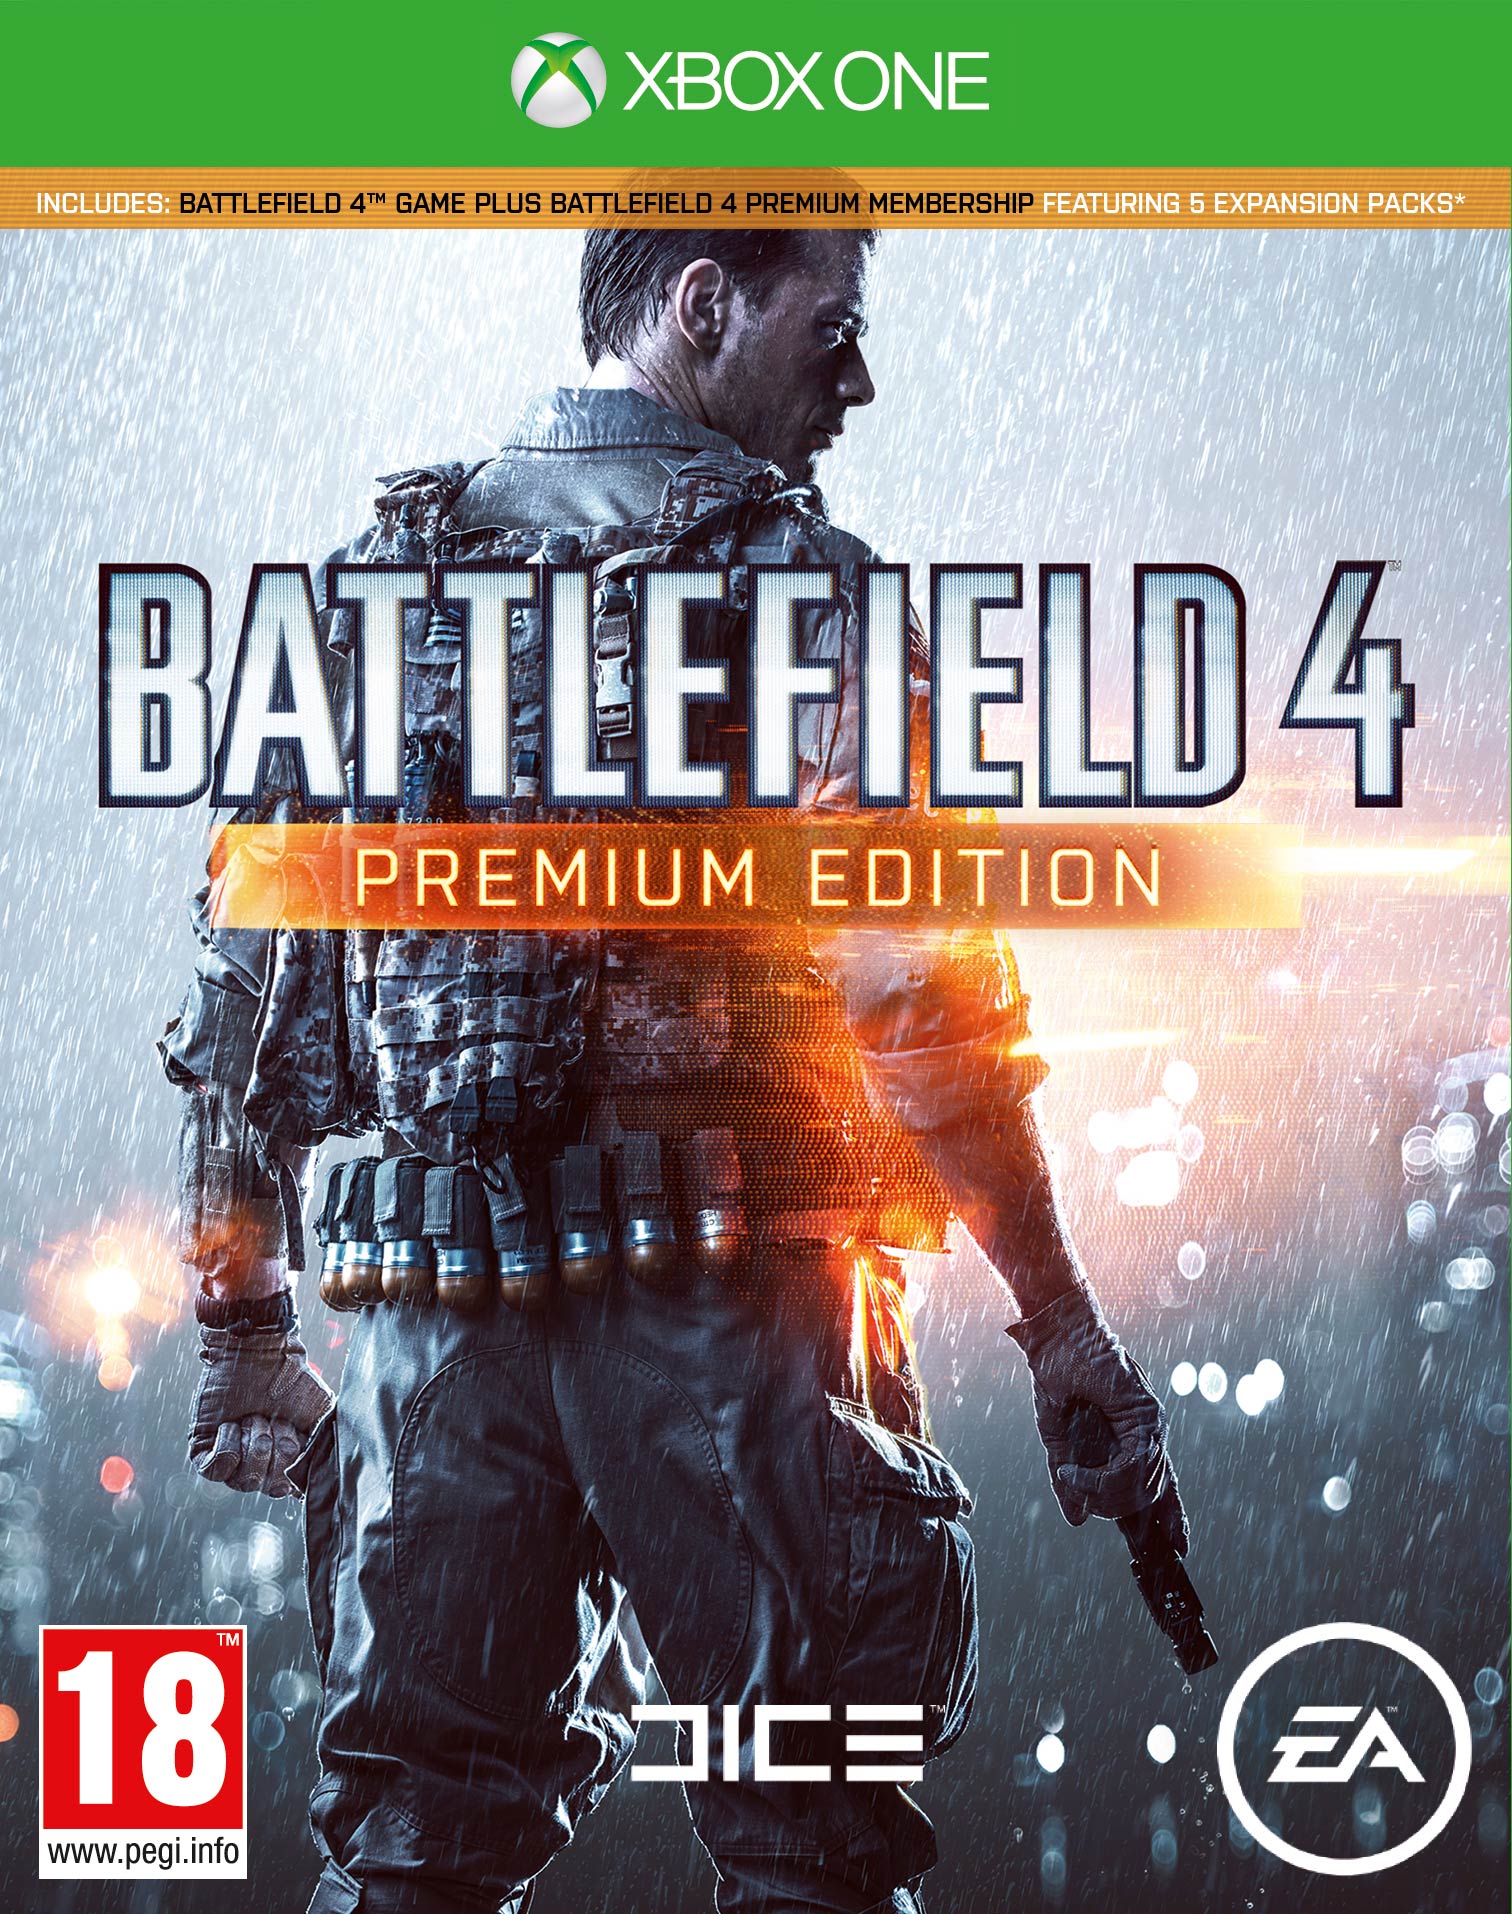 battlefield 4 xbox one download free